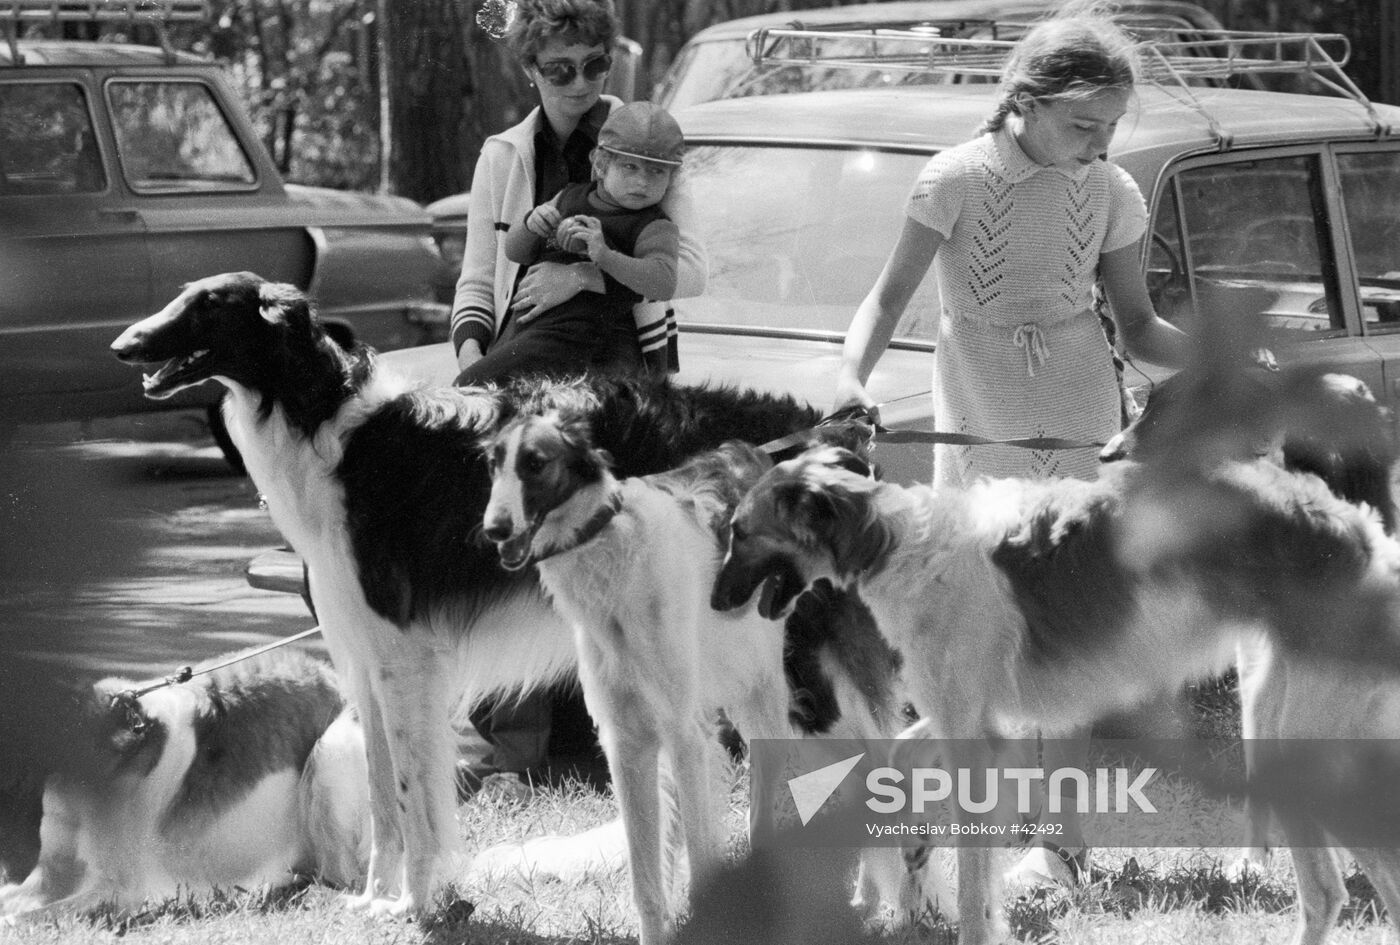 EXHIBITION HUNTING DOGS RUSSIAN BORZOI KIEV